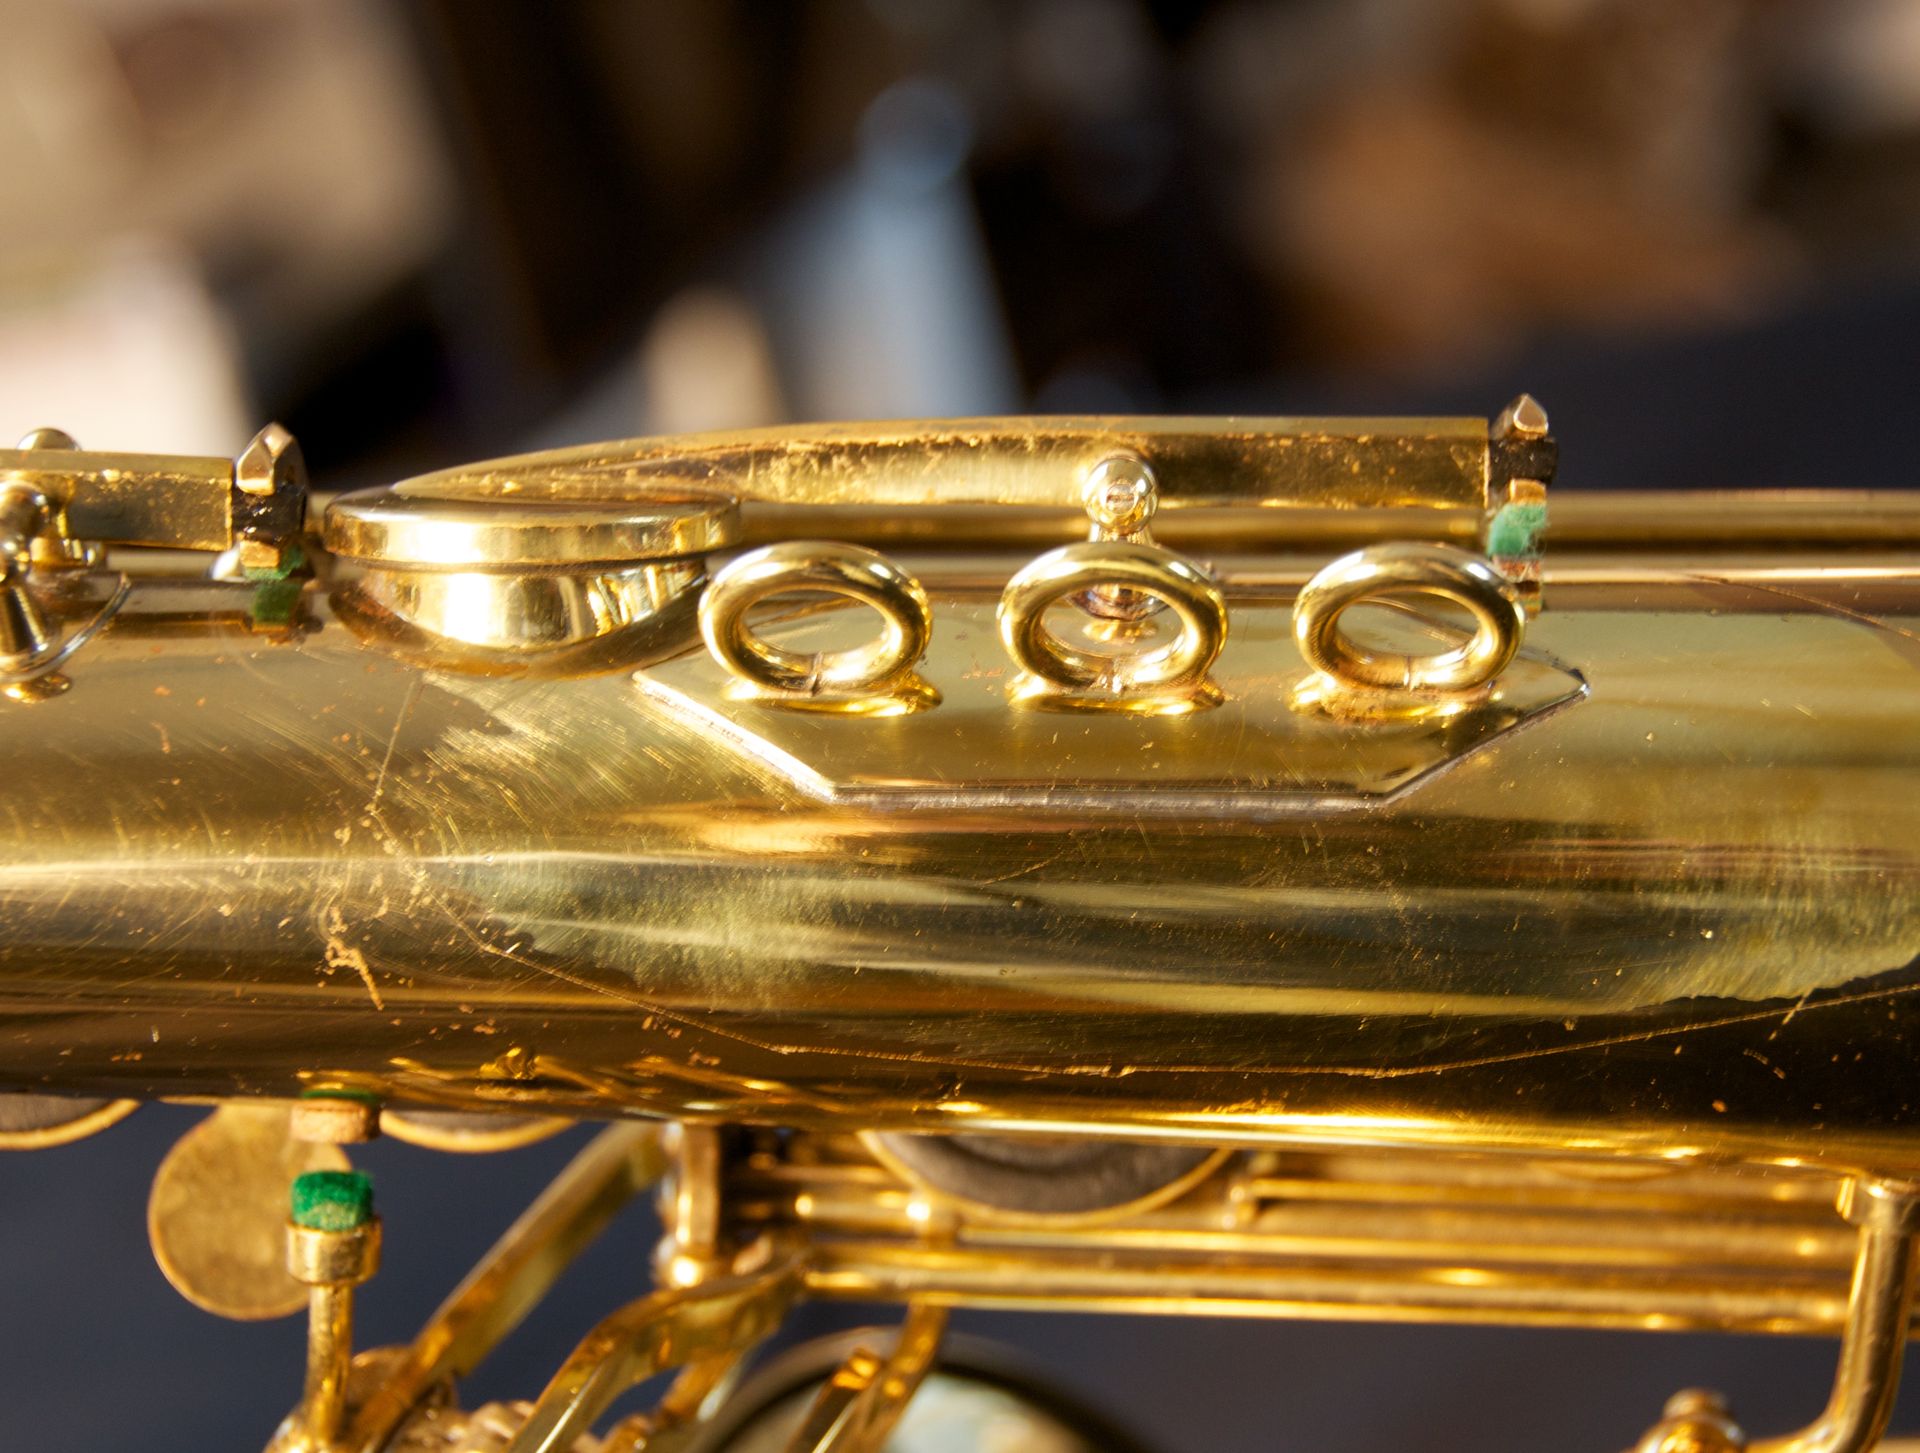 vito alto saxophone serial numbers